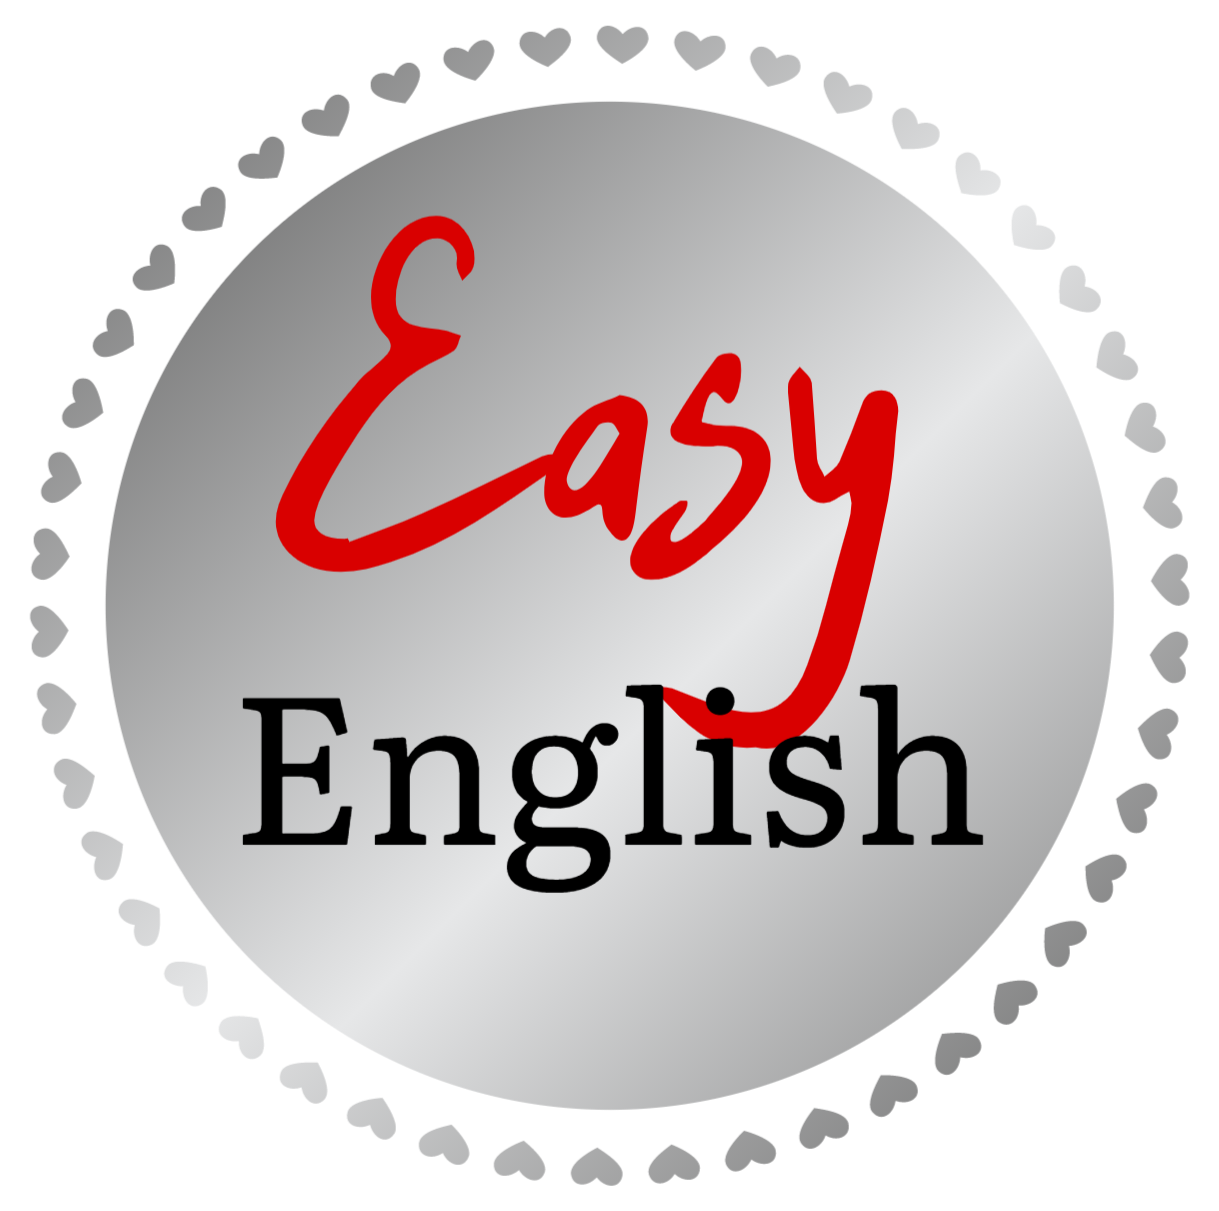 ИЗИ Инглиш. Легкий английский. Easy English логотип. Easy English картинки. Easy с английского на русский